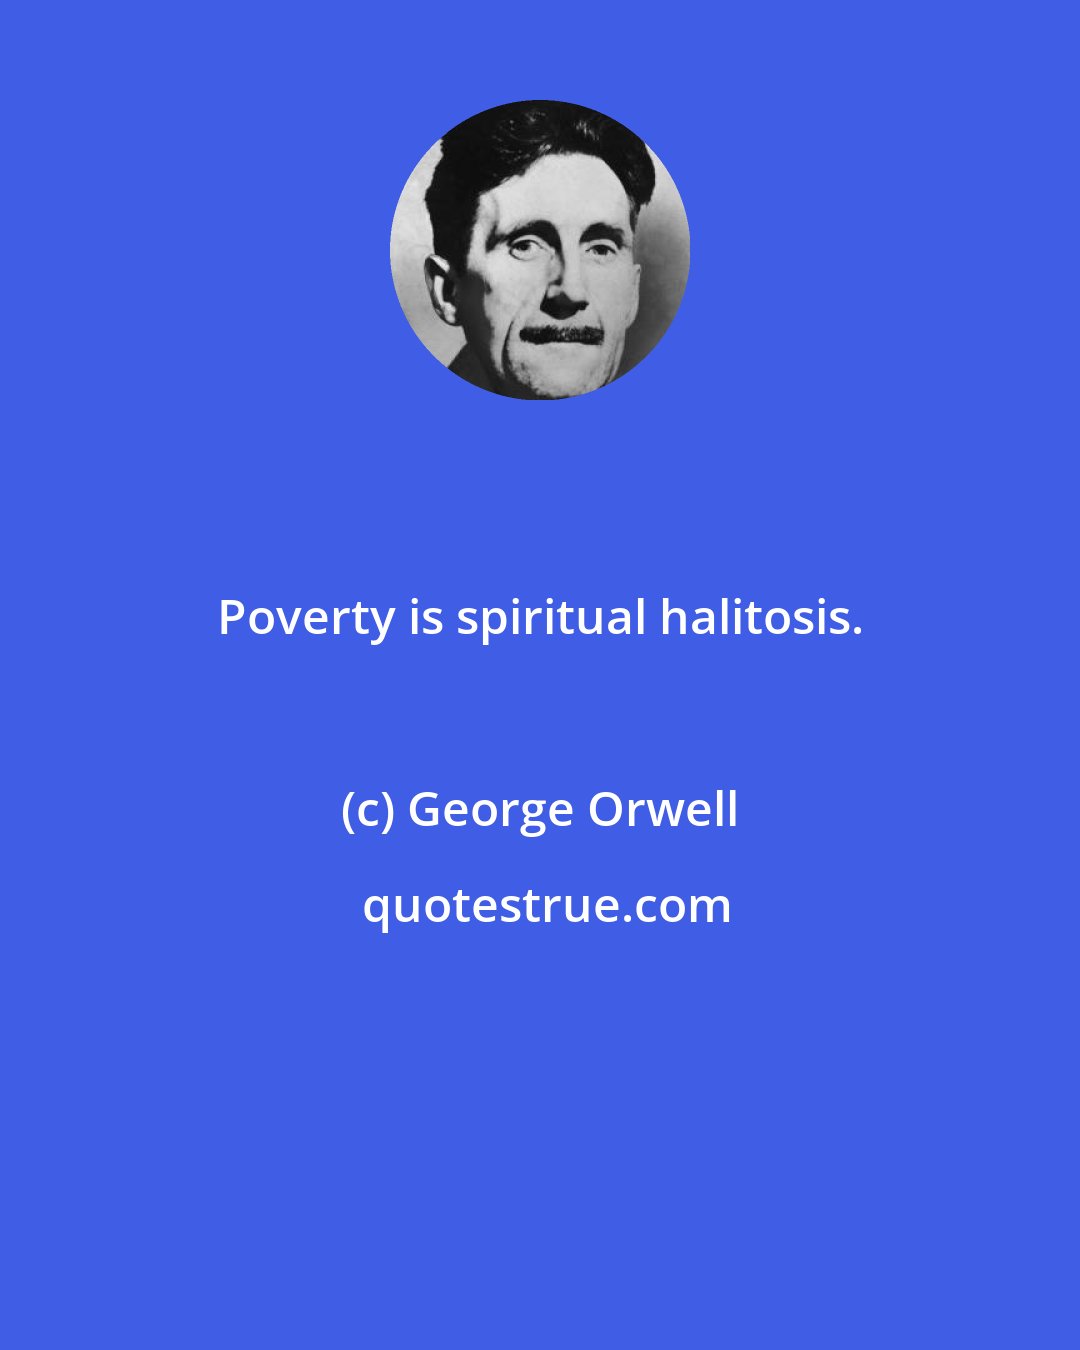 George Orwell: Poverty is spiritual halitosis.